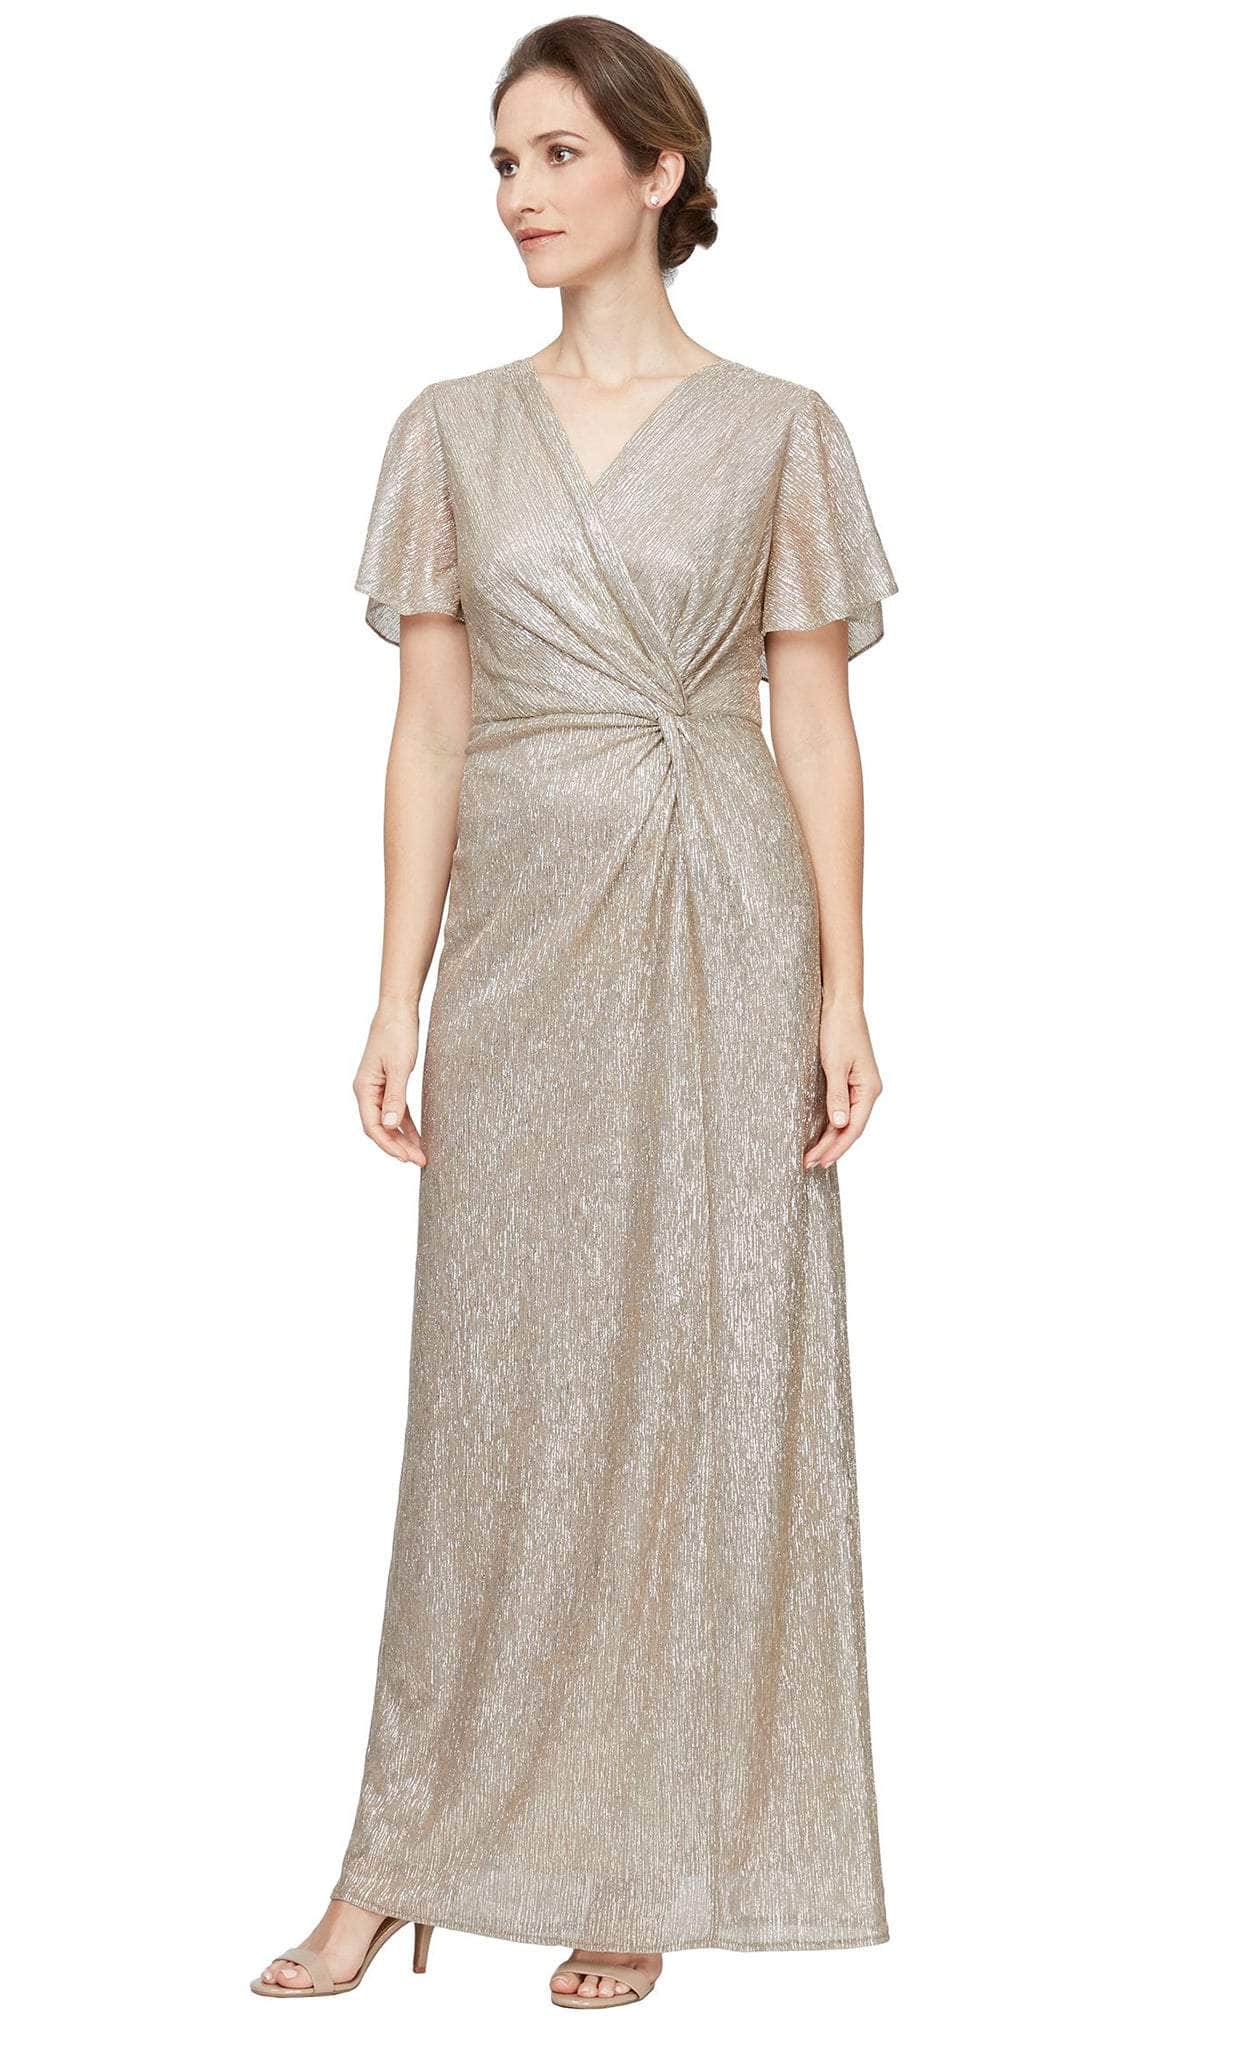 Alex Evenings 8427706 - Flutter Metallic Plus Size Dress Special Occasion Dress 14W / Sand